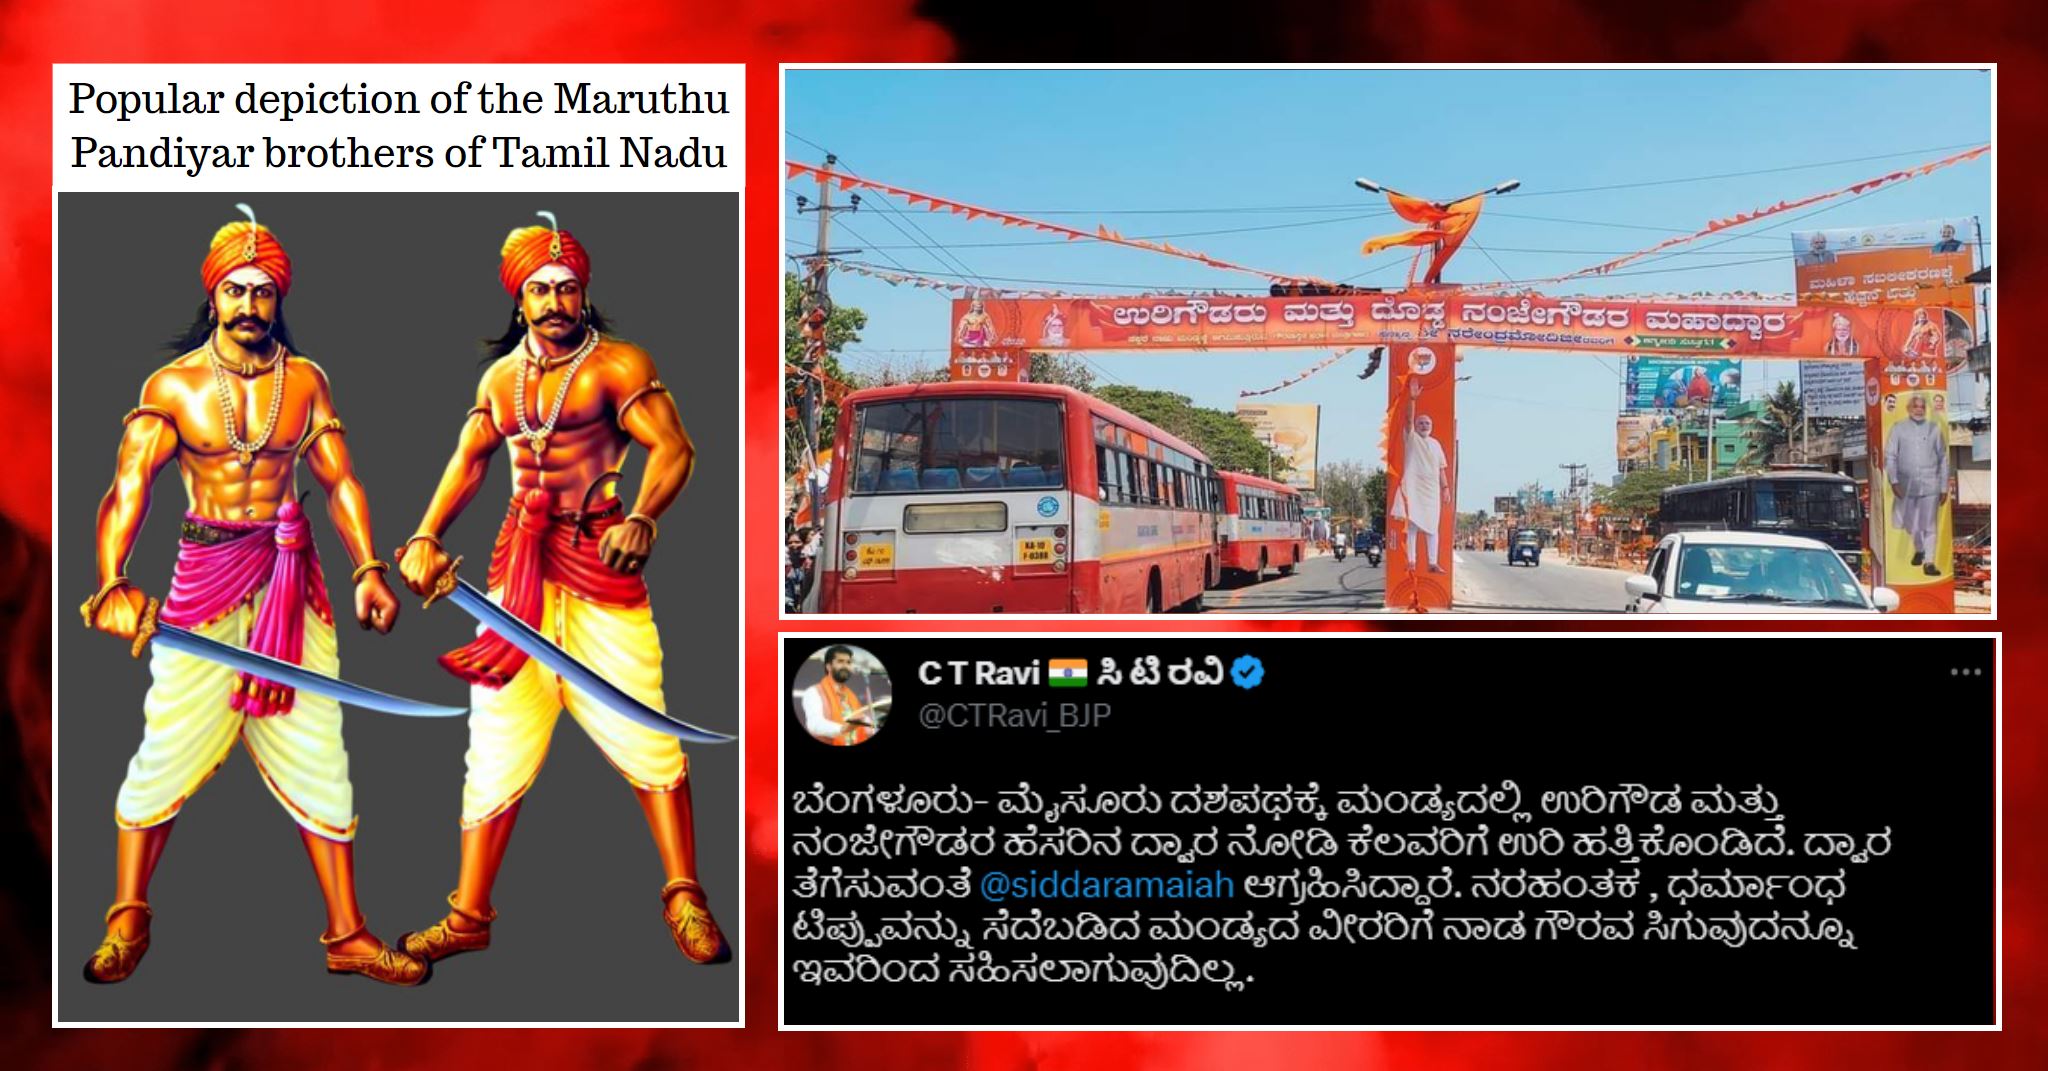 Karnataka BJP's double whammy: Tamil heroes on Modi welcome gate, false claim on Tipu death - Alt News